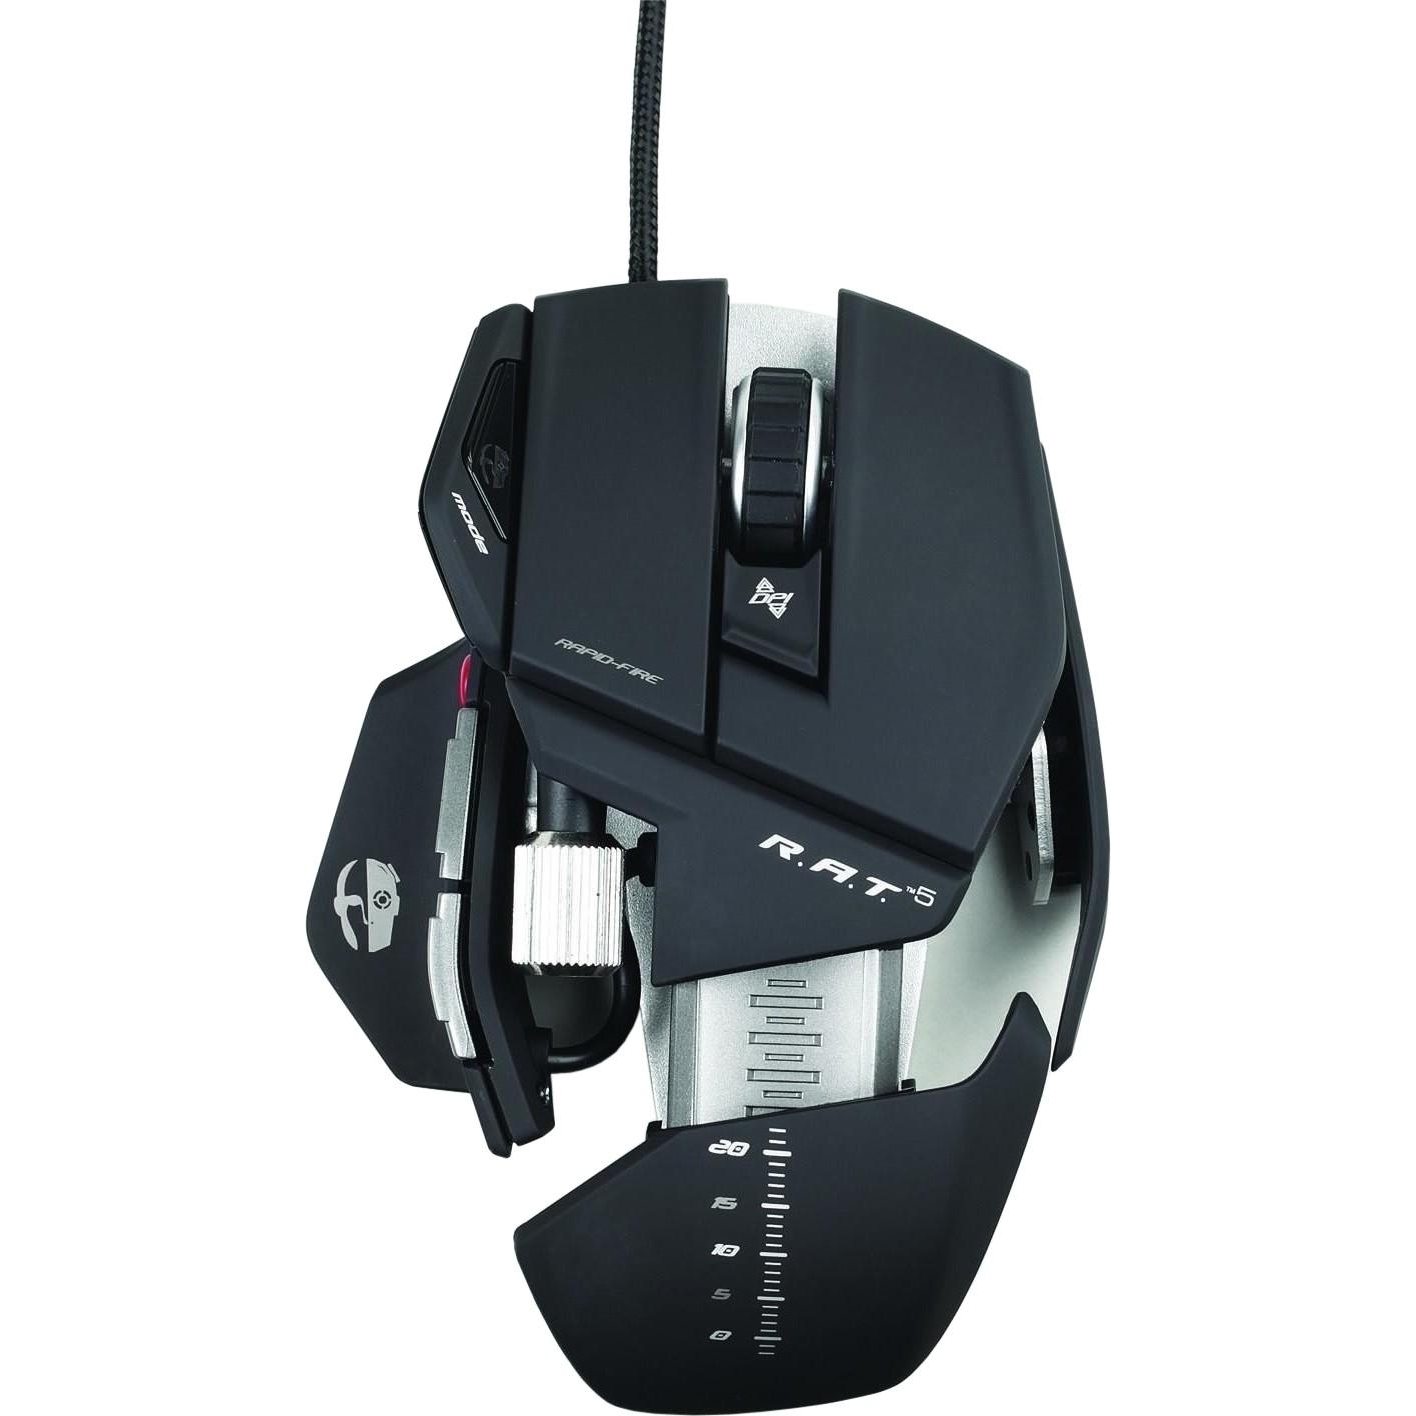 Mad Catz R.A.T. 5 Gaming Mouse Black (MCB4370500B2/04/1) - зображення 1